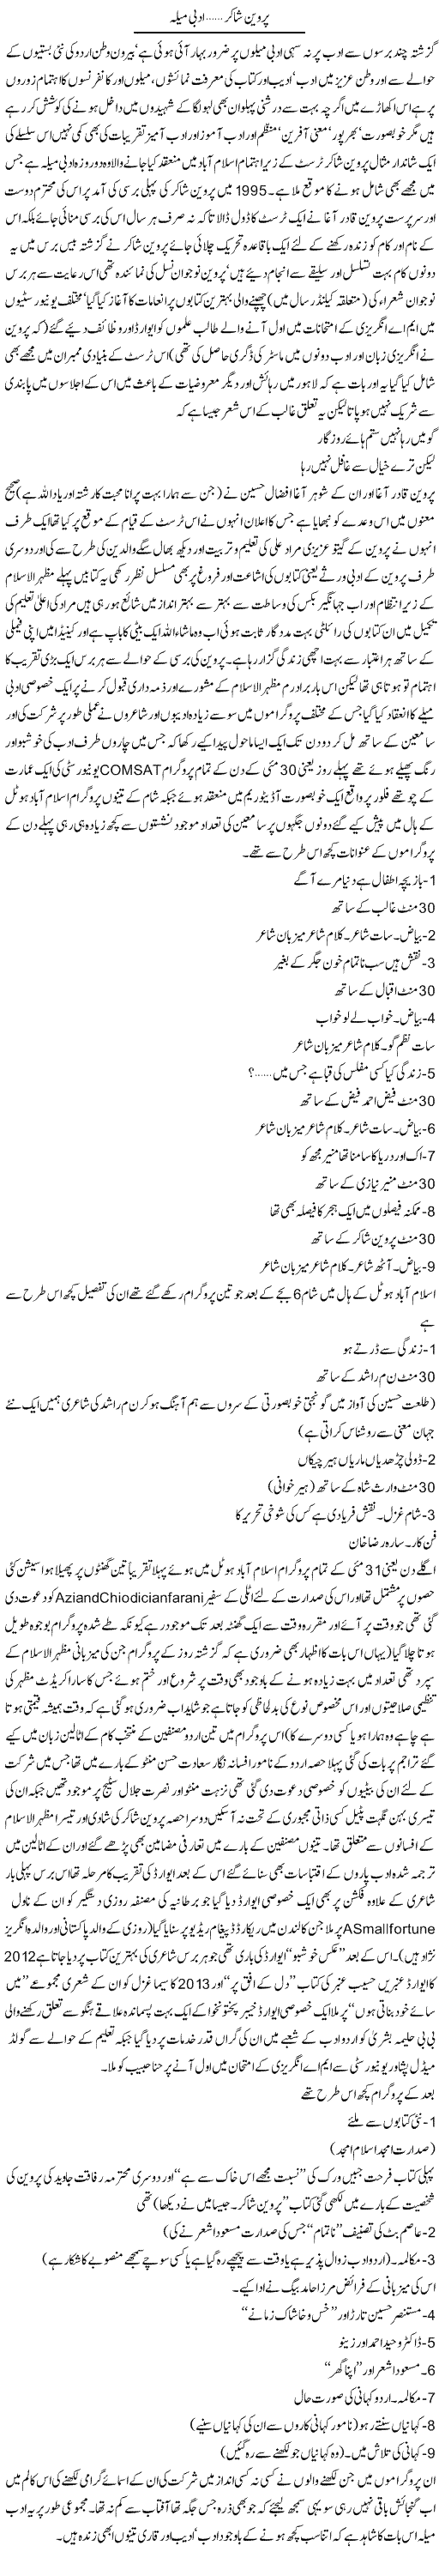 Pervin Shakir Adbi Mela | Amjad Islam Amjad | Daily Urdu Columns